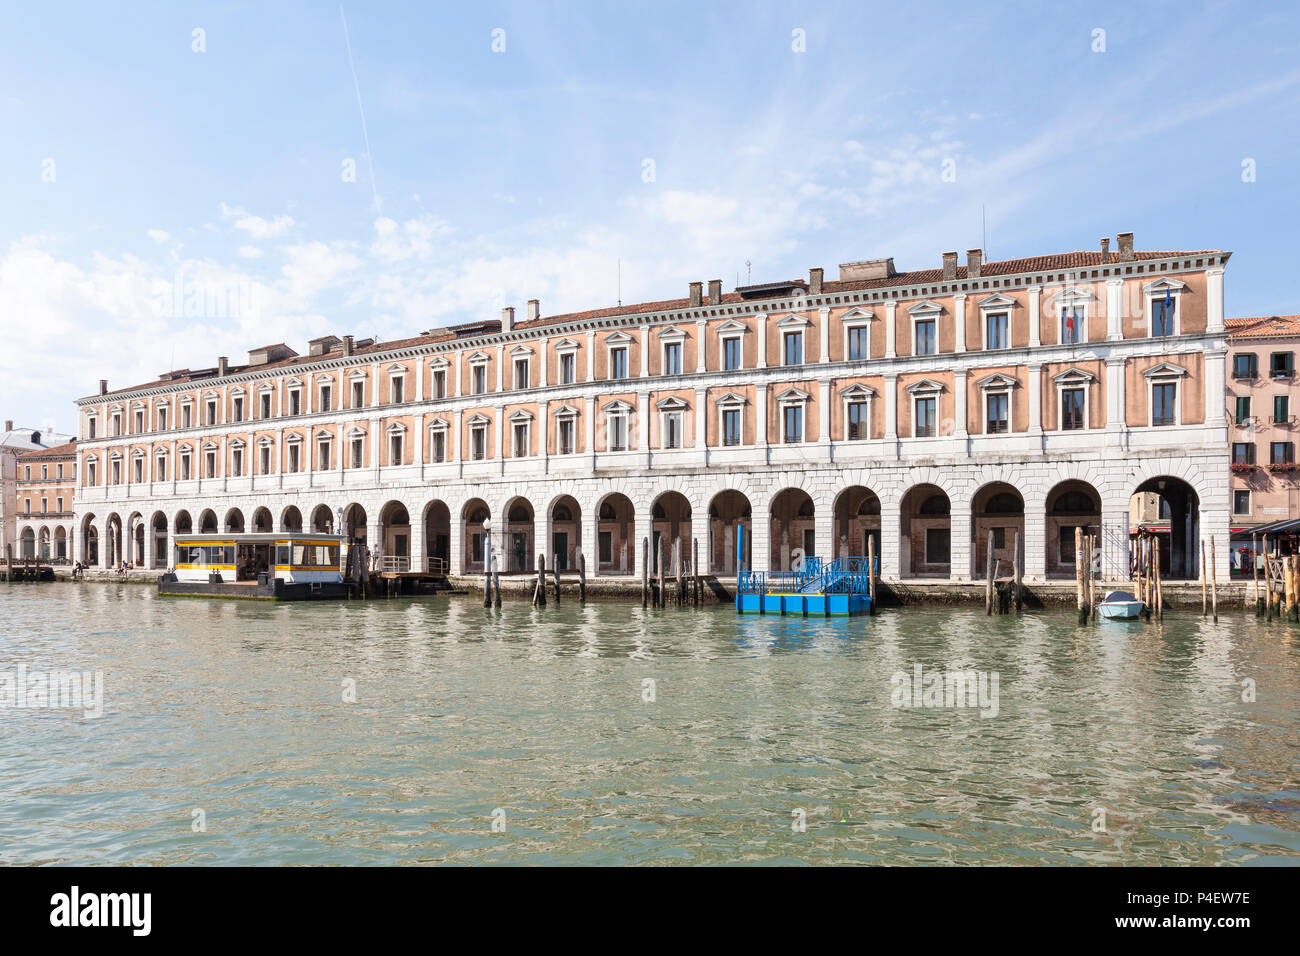 Fabbriche Nuove, Grand Canal, Rialto Mercato, San Polo, Venice, Veneto, Italy dating from 1554  by Jacopo Sansovino. Renaissance architecture. Stock Photo